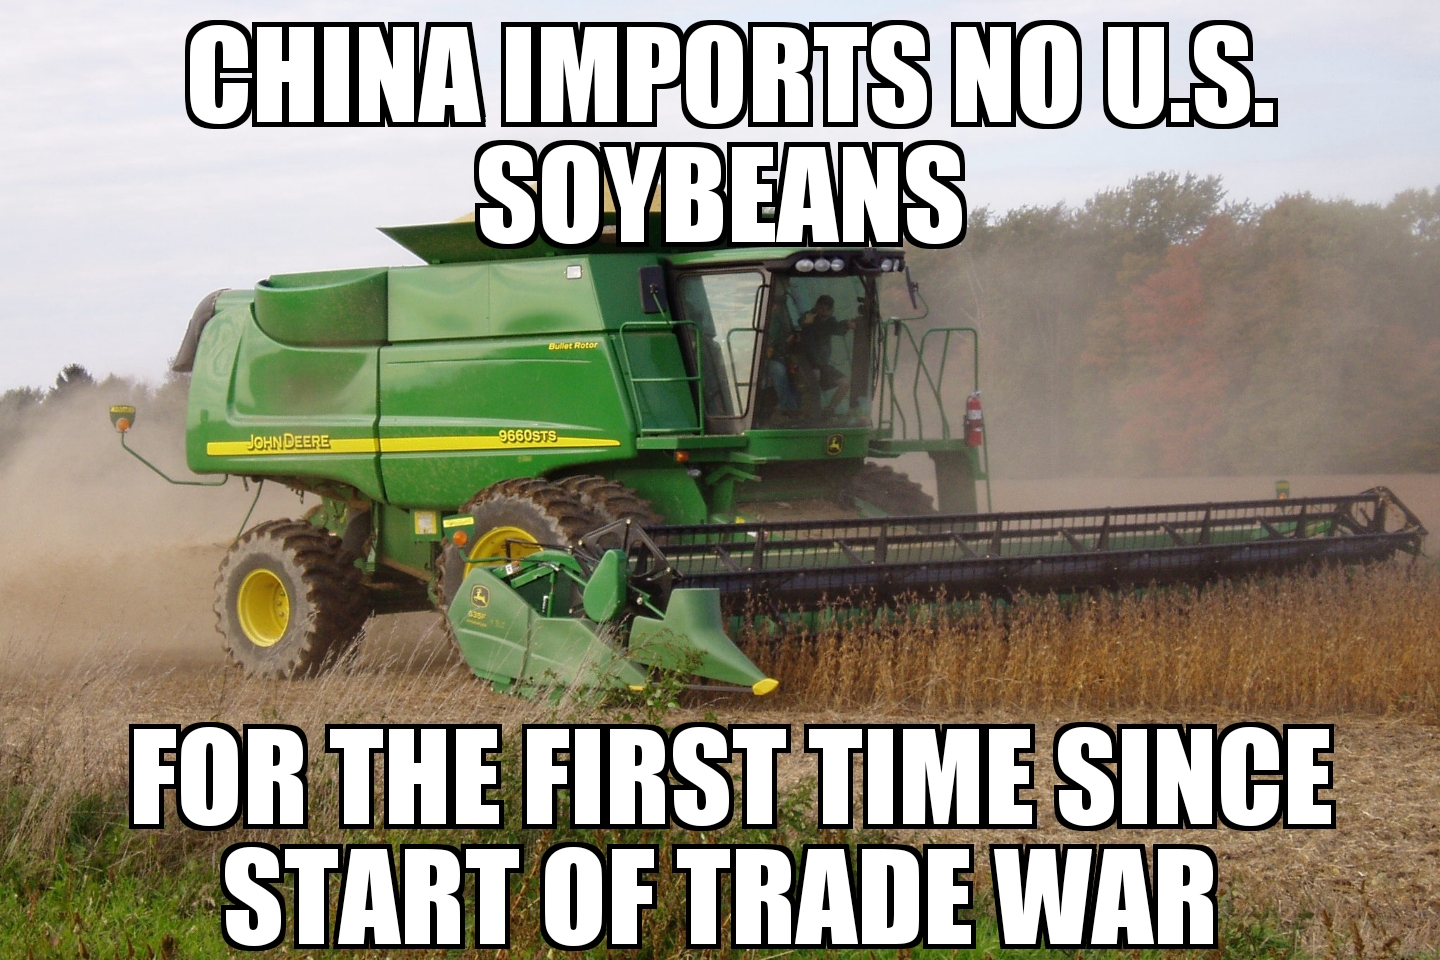 China imports no U.S. soybeans